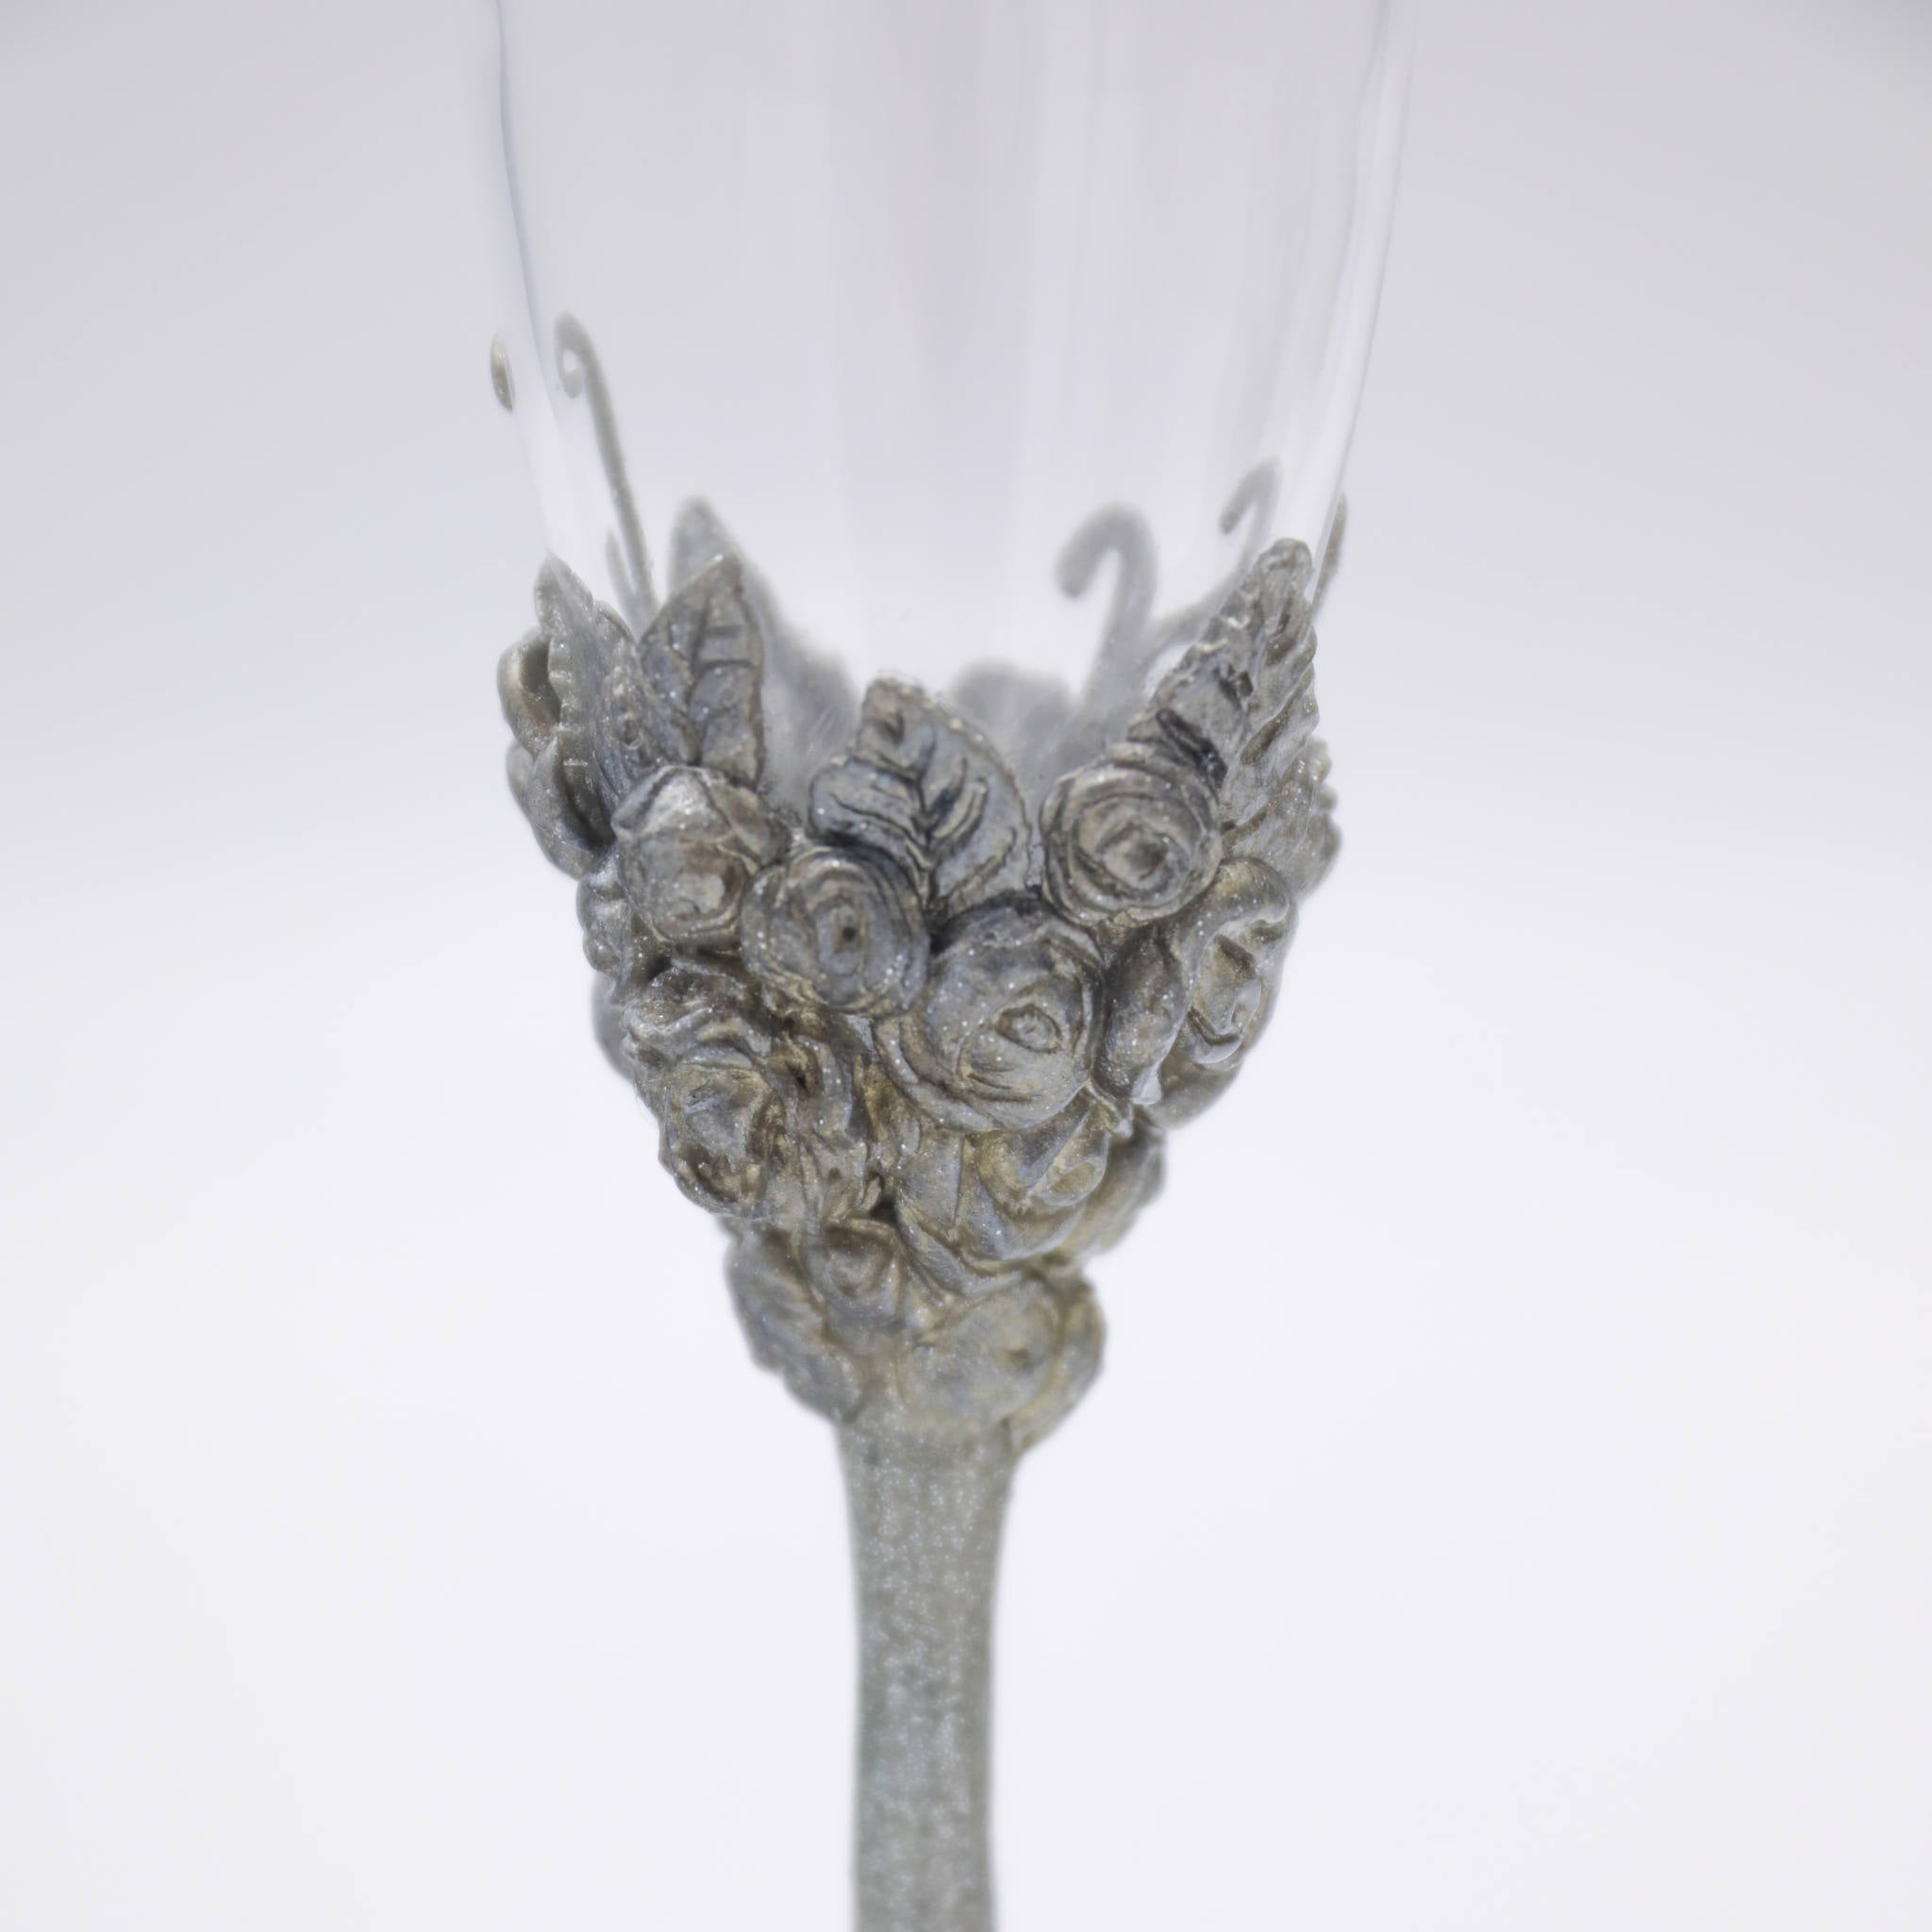 Silver Roses Champagne Flute Set - Decorative for Special Occasions -  Daree's Designs - Darees Designs